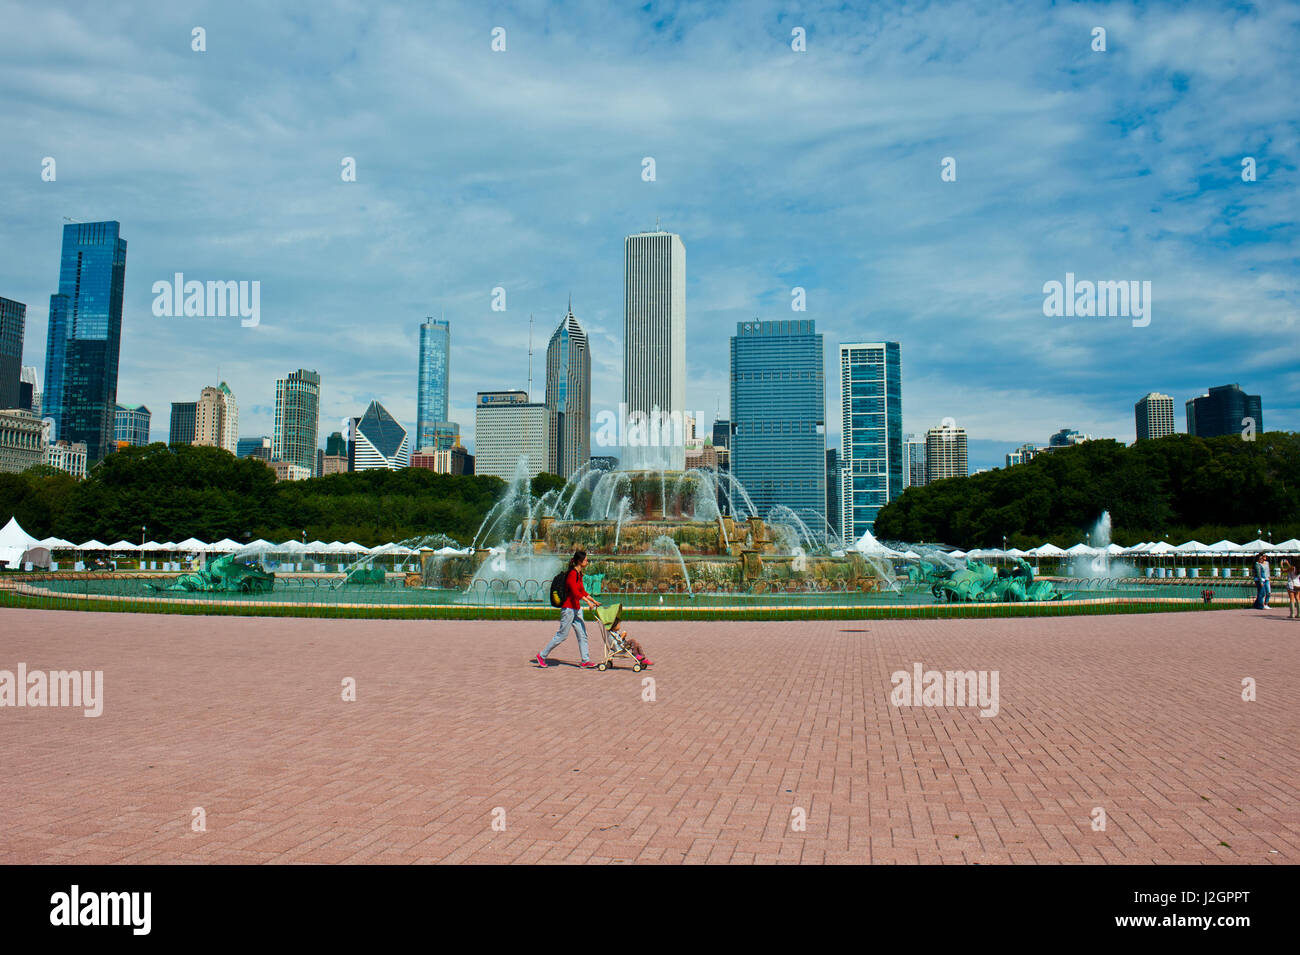 USA, Illinois, Chicago, Grant Park, Buckingham Fountain and Loop Skyline Background Stock Photo